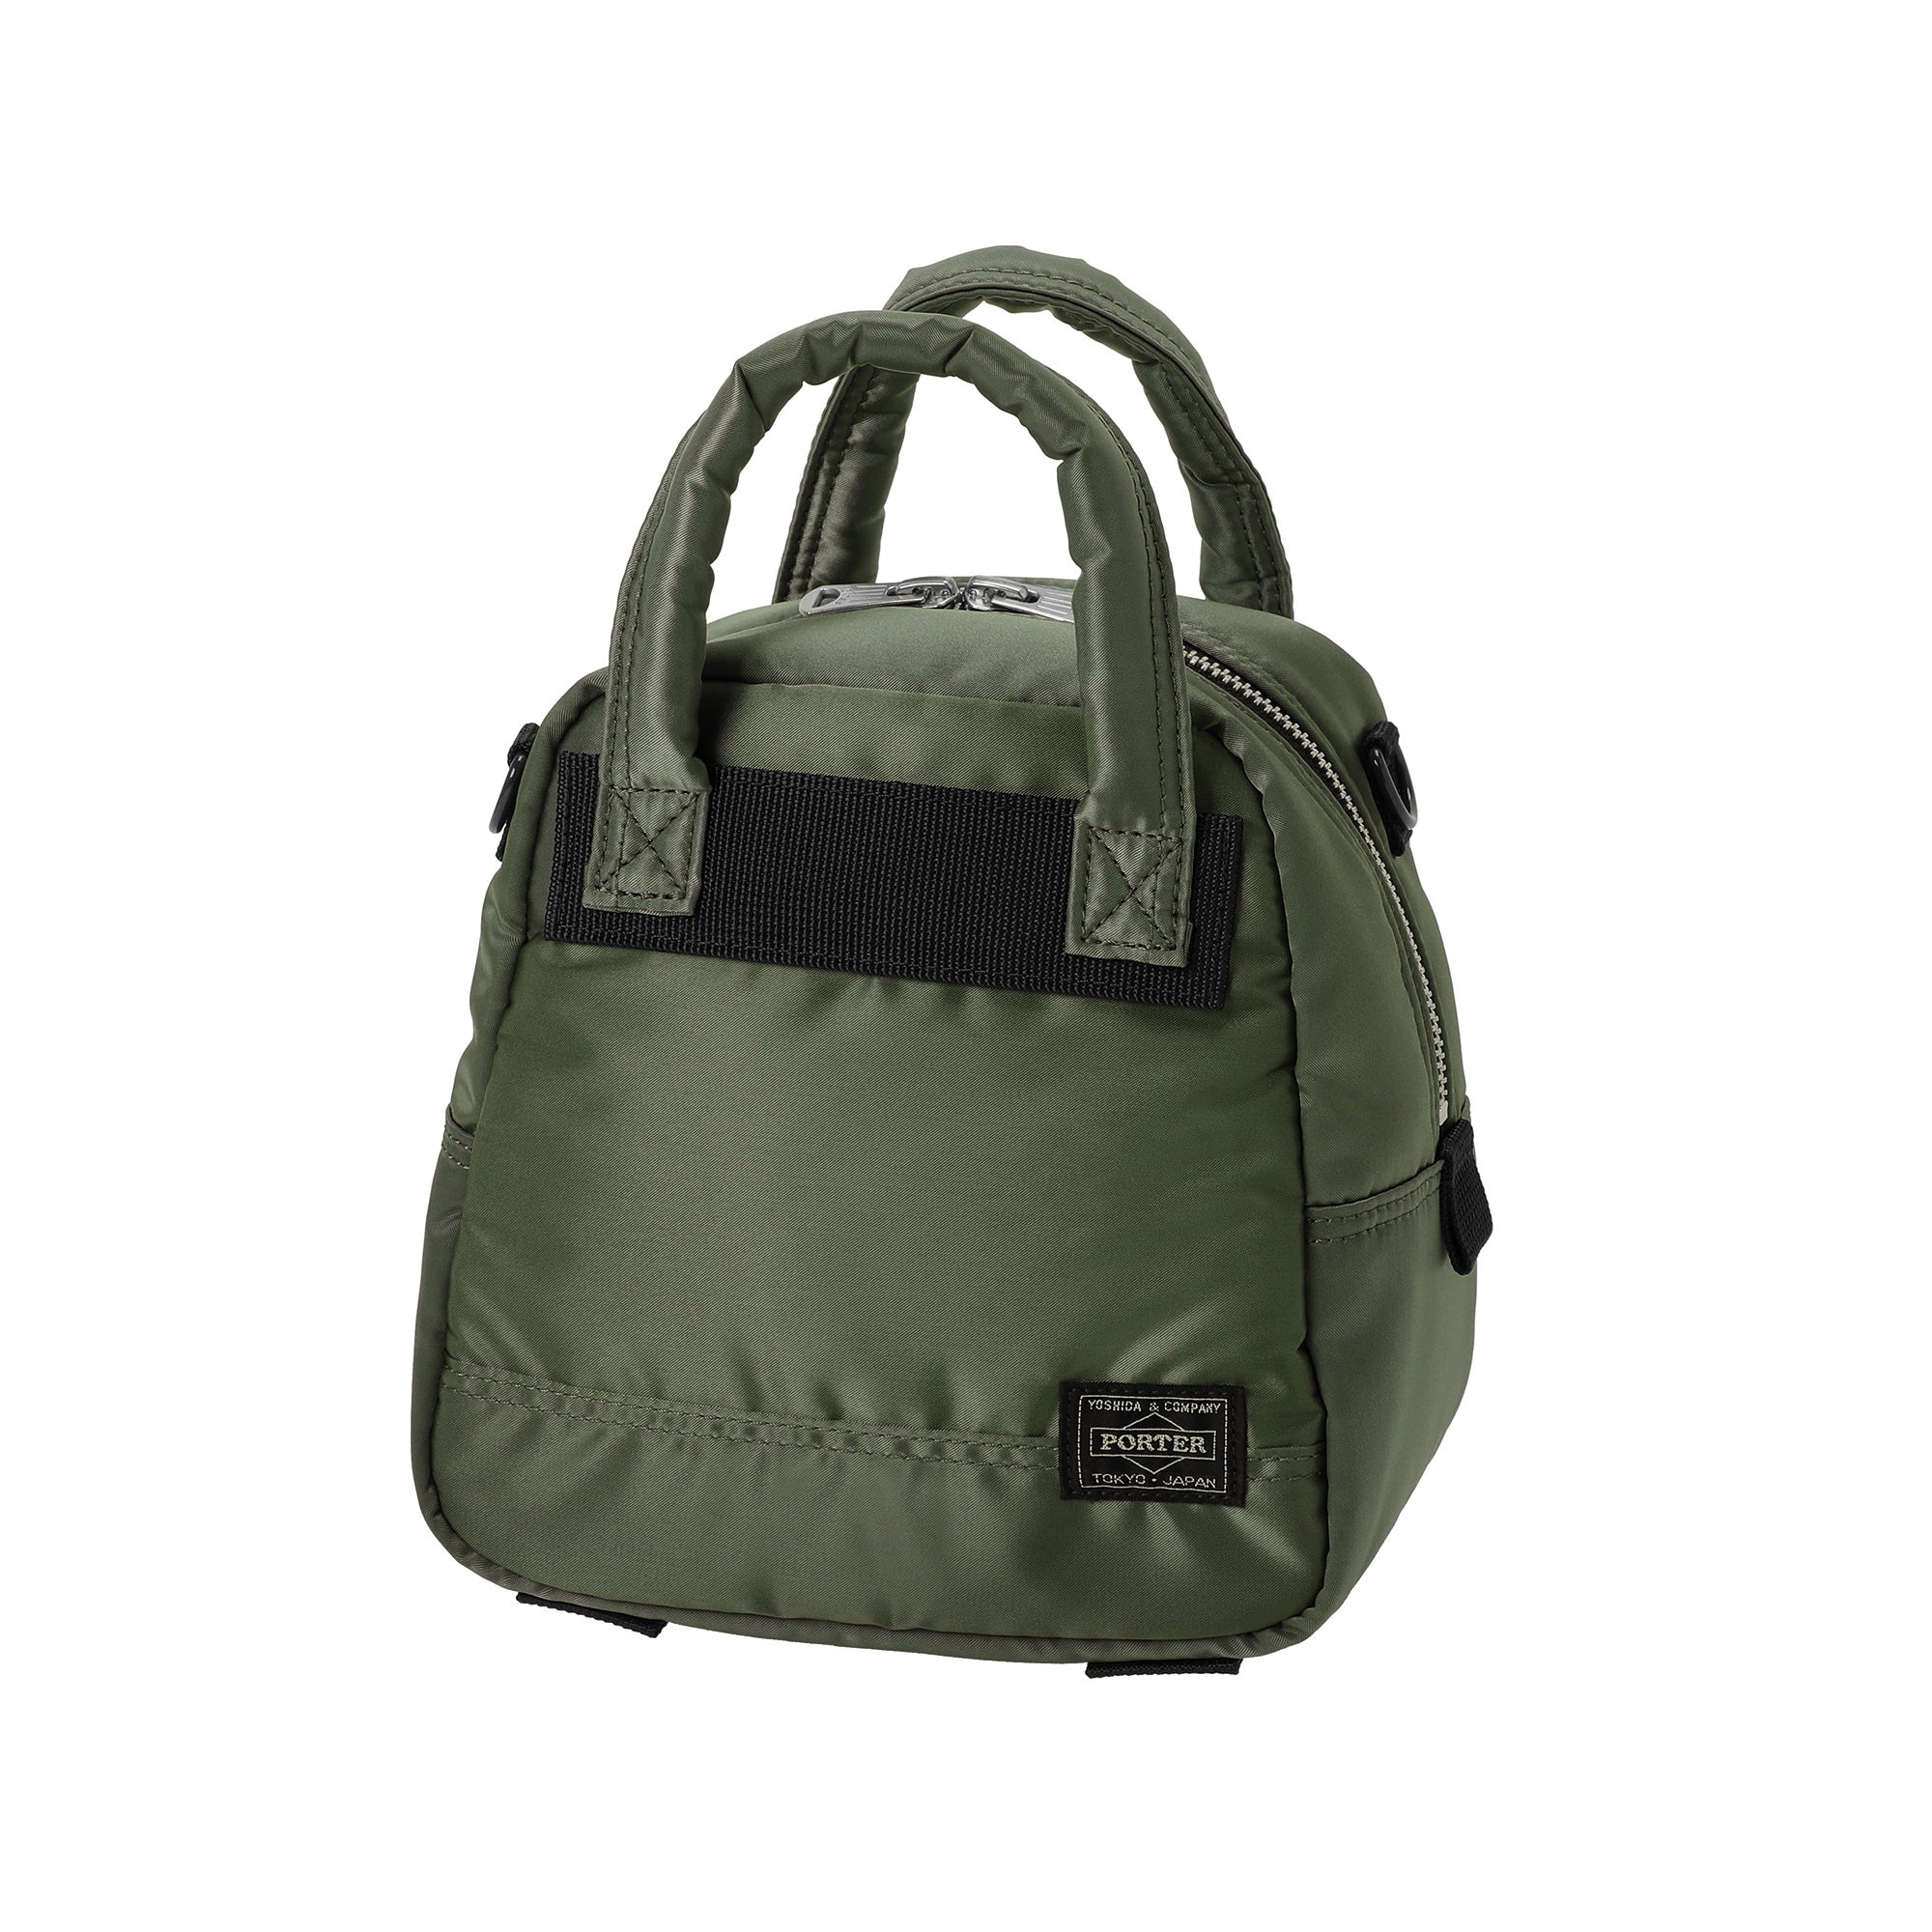 PORTER - PX TANKER Bowling Bag S - (Sage Green)